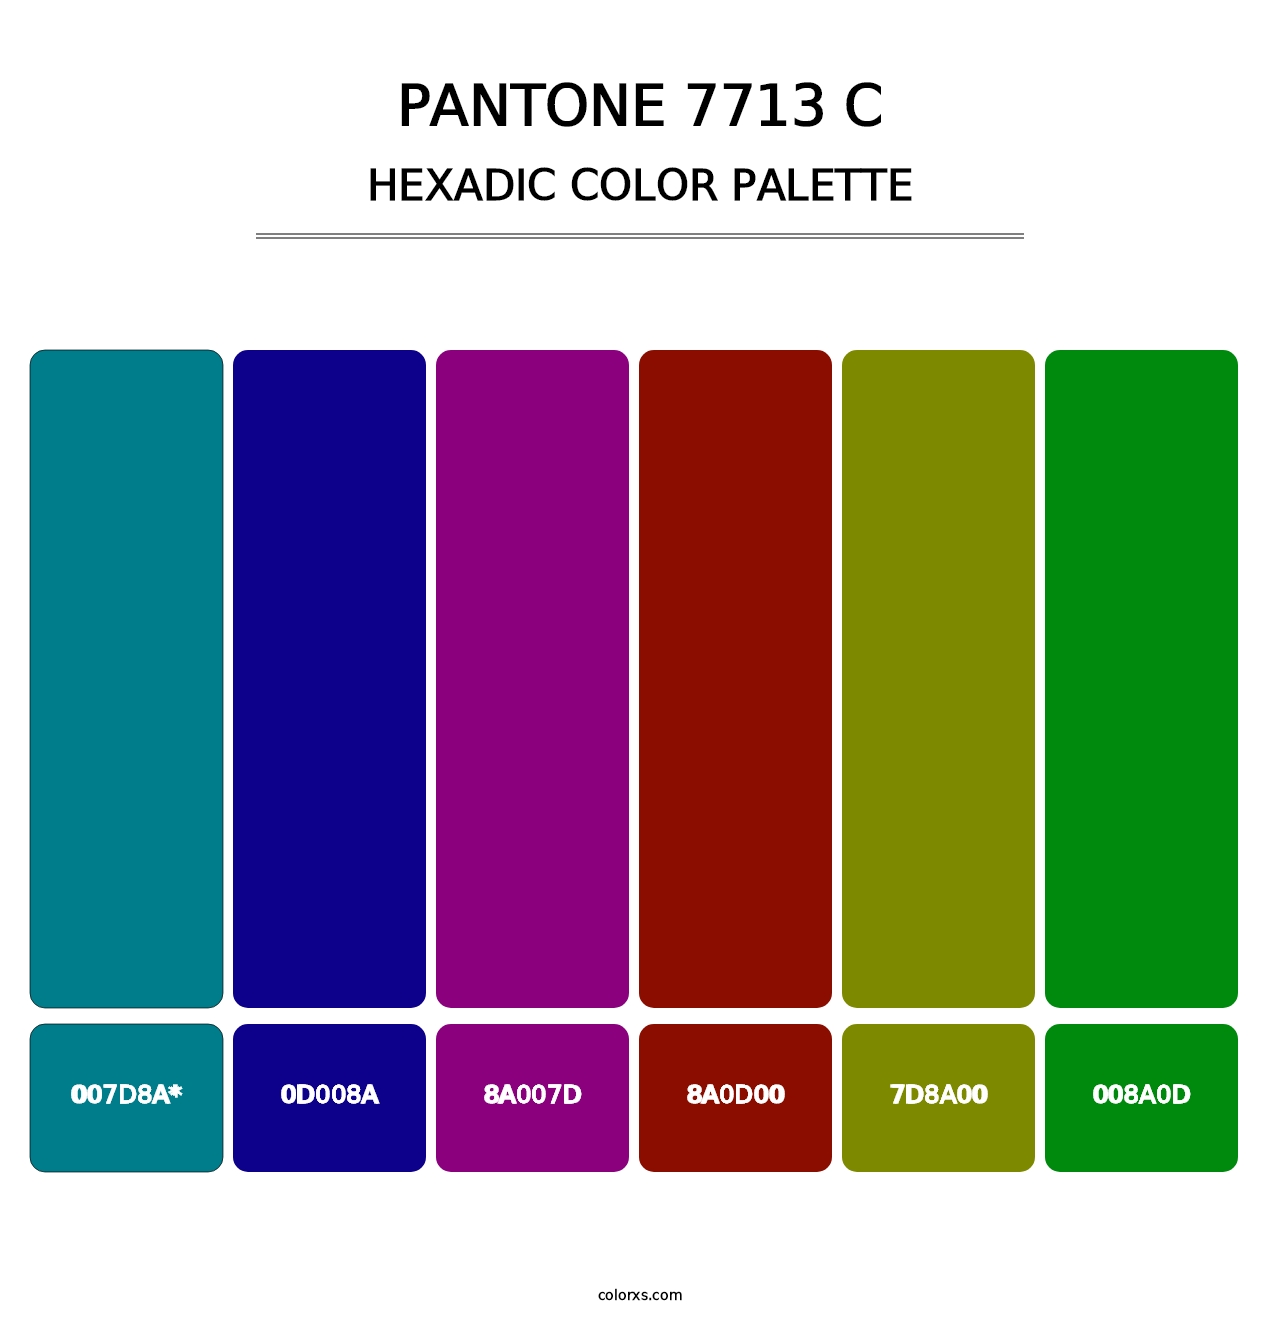 PANTONE 7713 C - Hexadic Color Palette